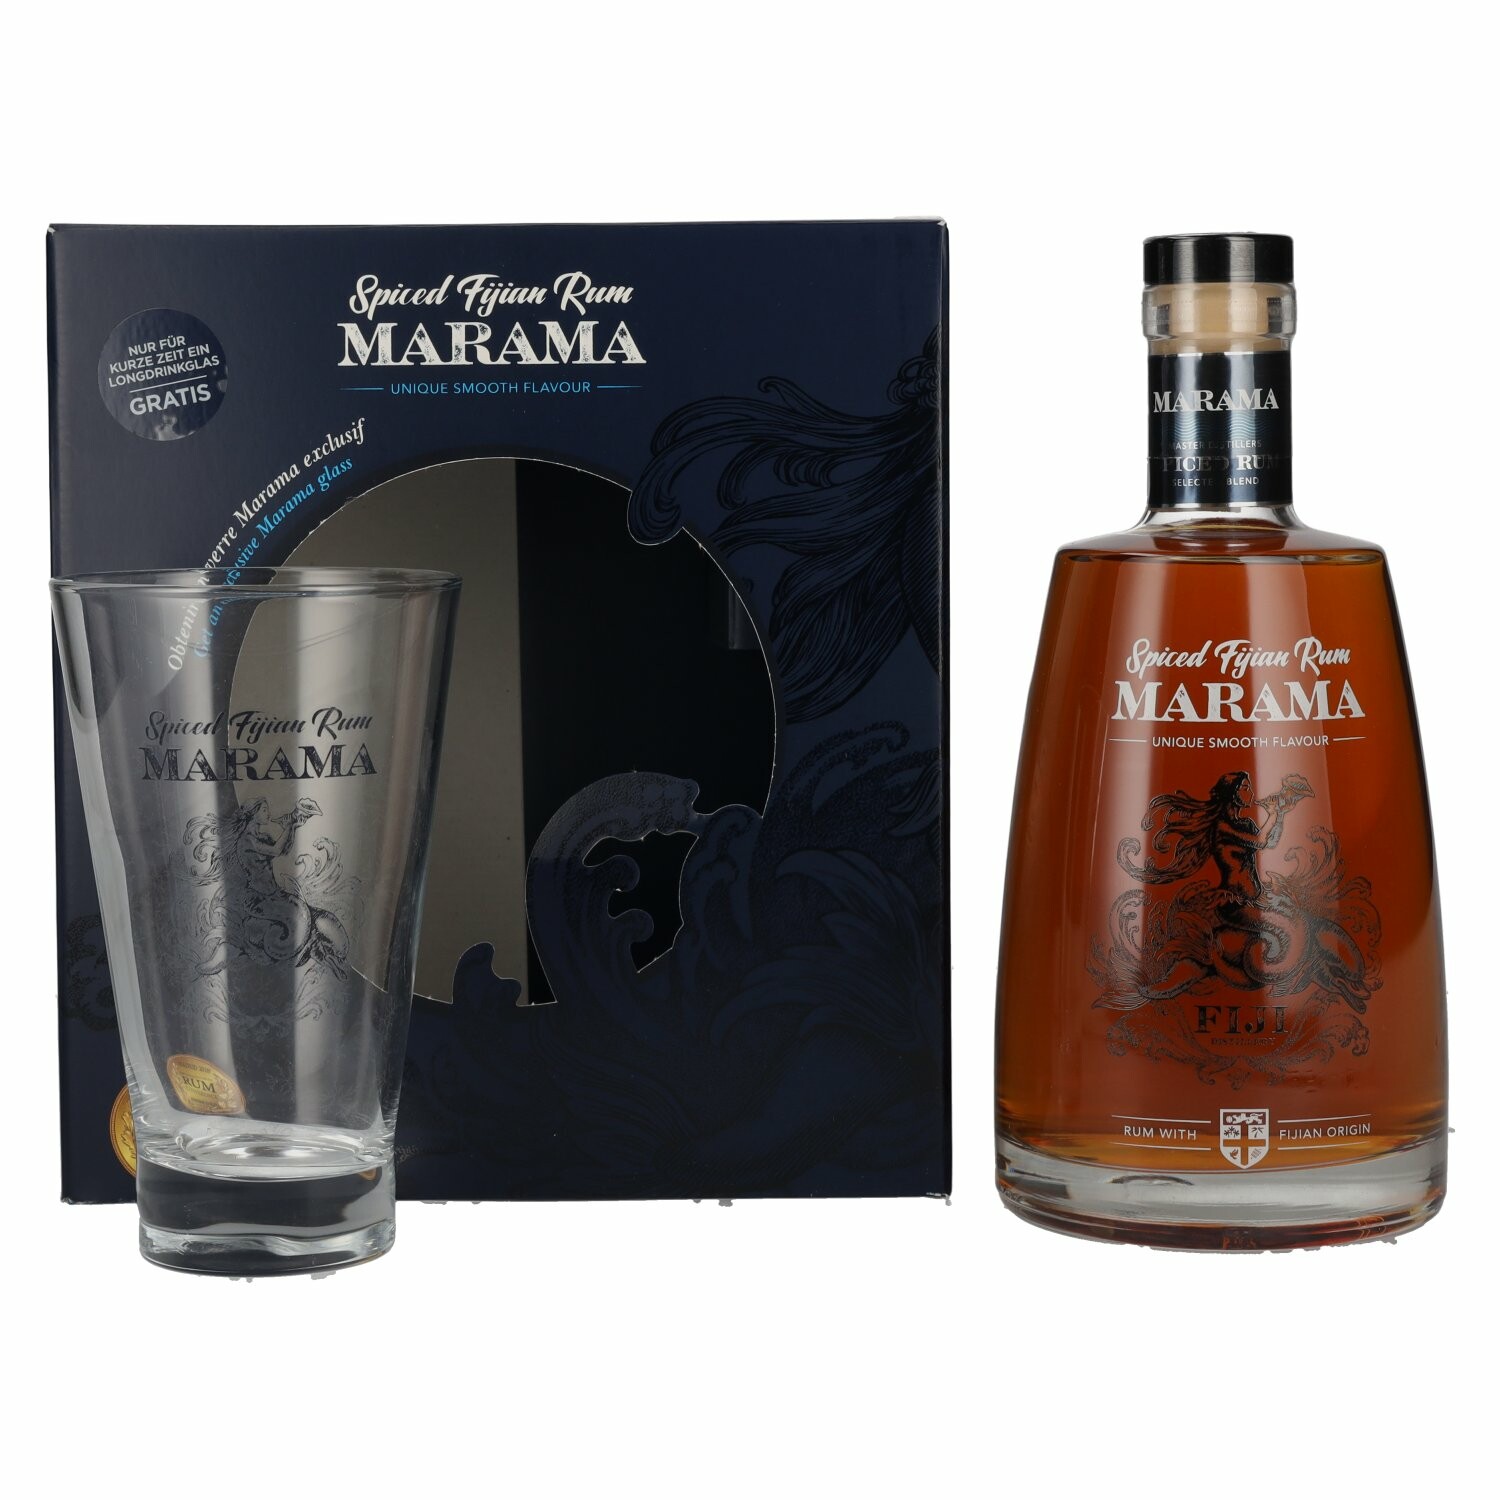 Marama Spiced Fijian Rum 40% Vol. 0,7l in Giftbox with glass